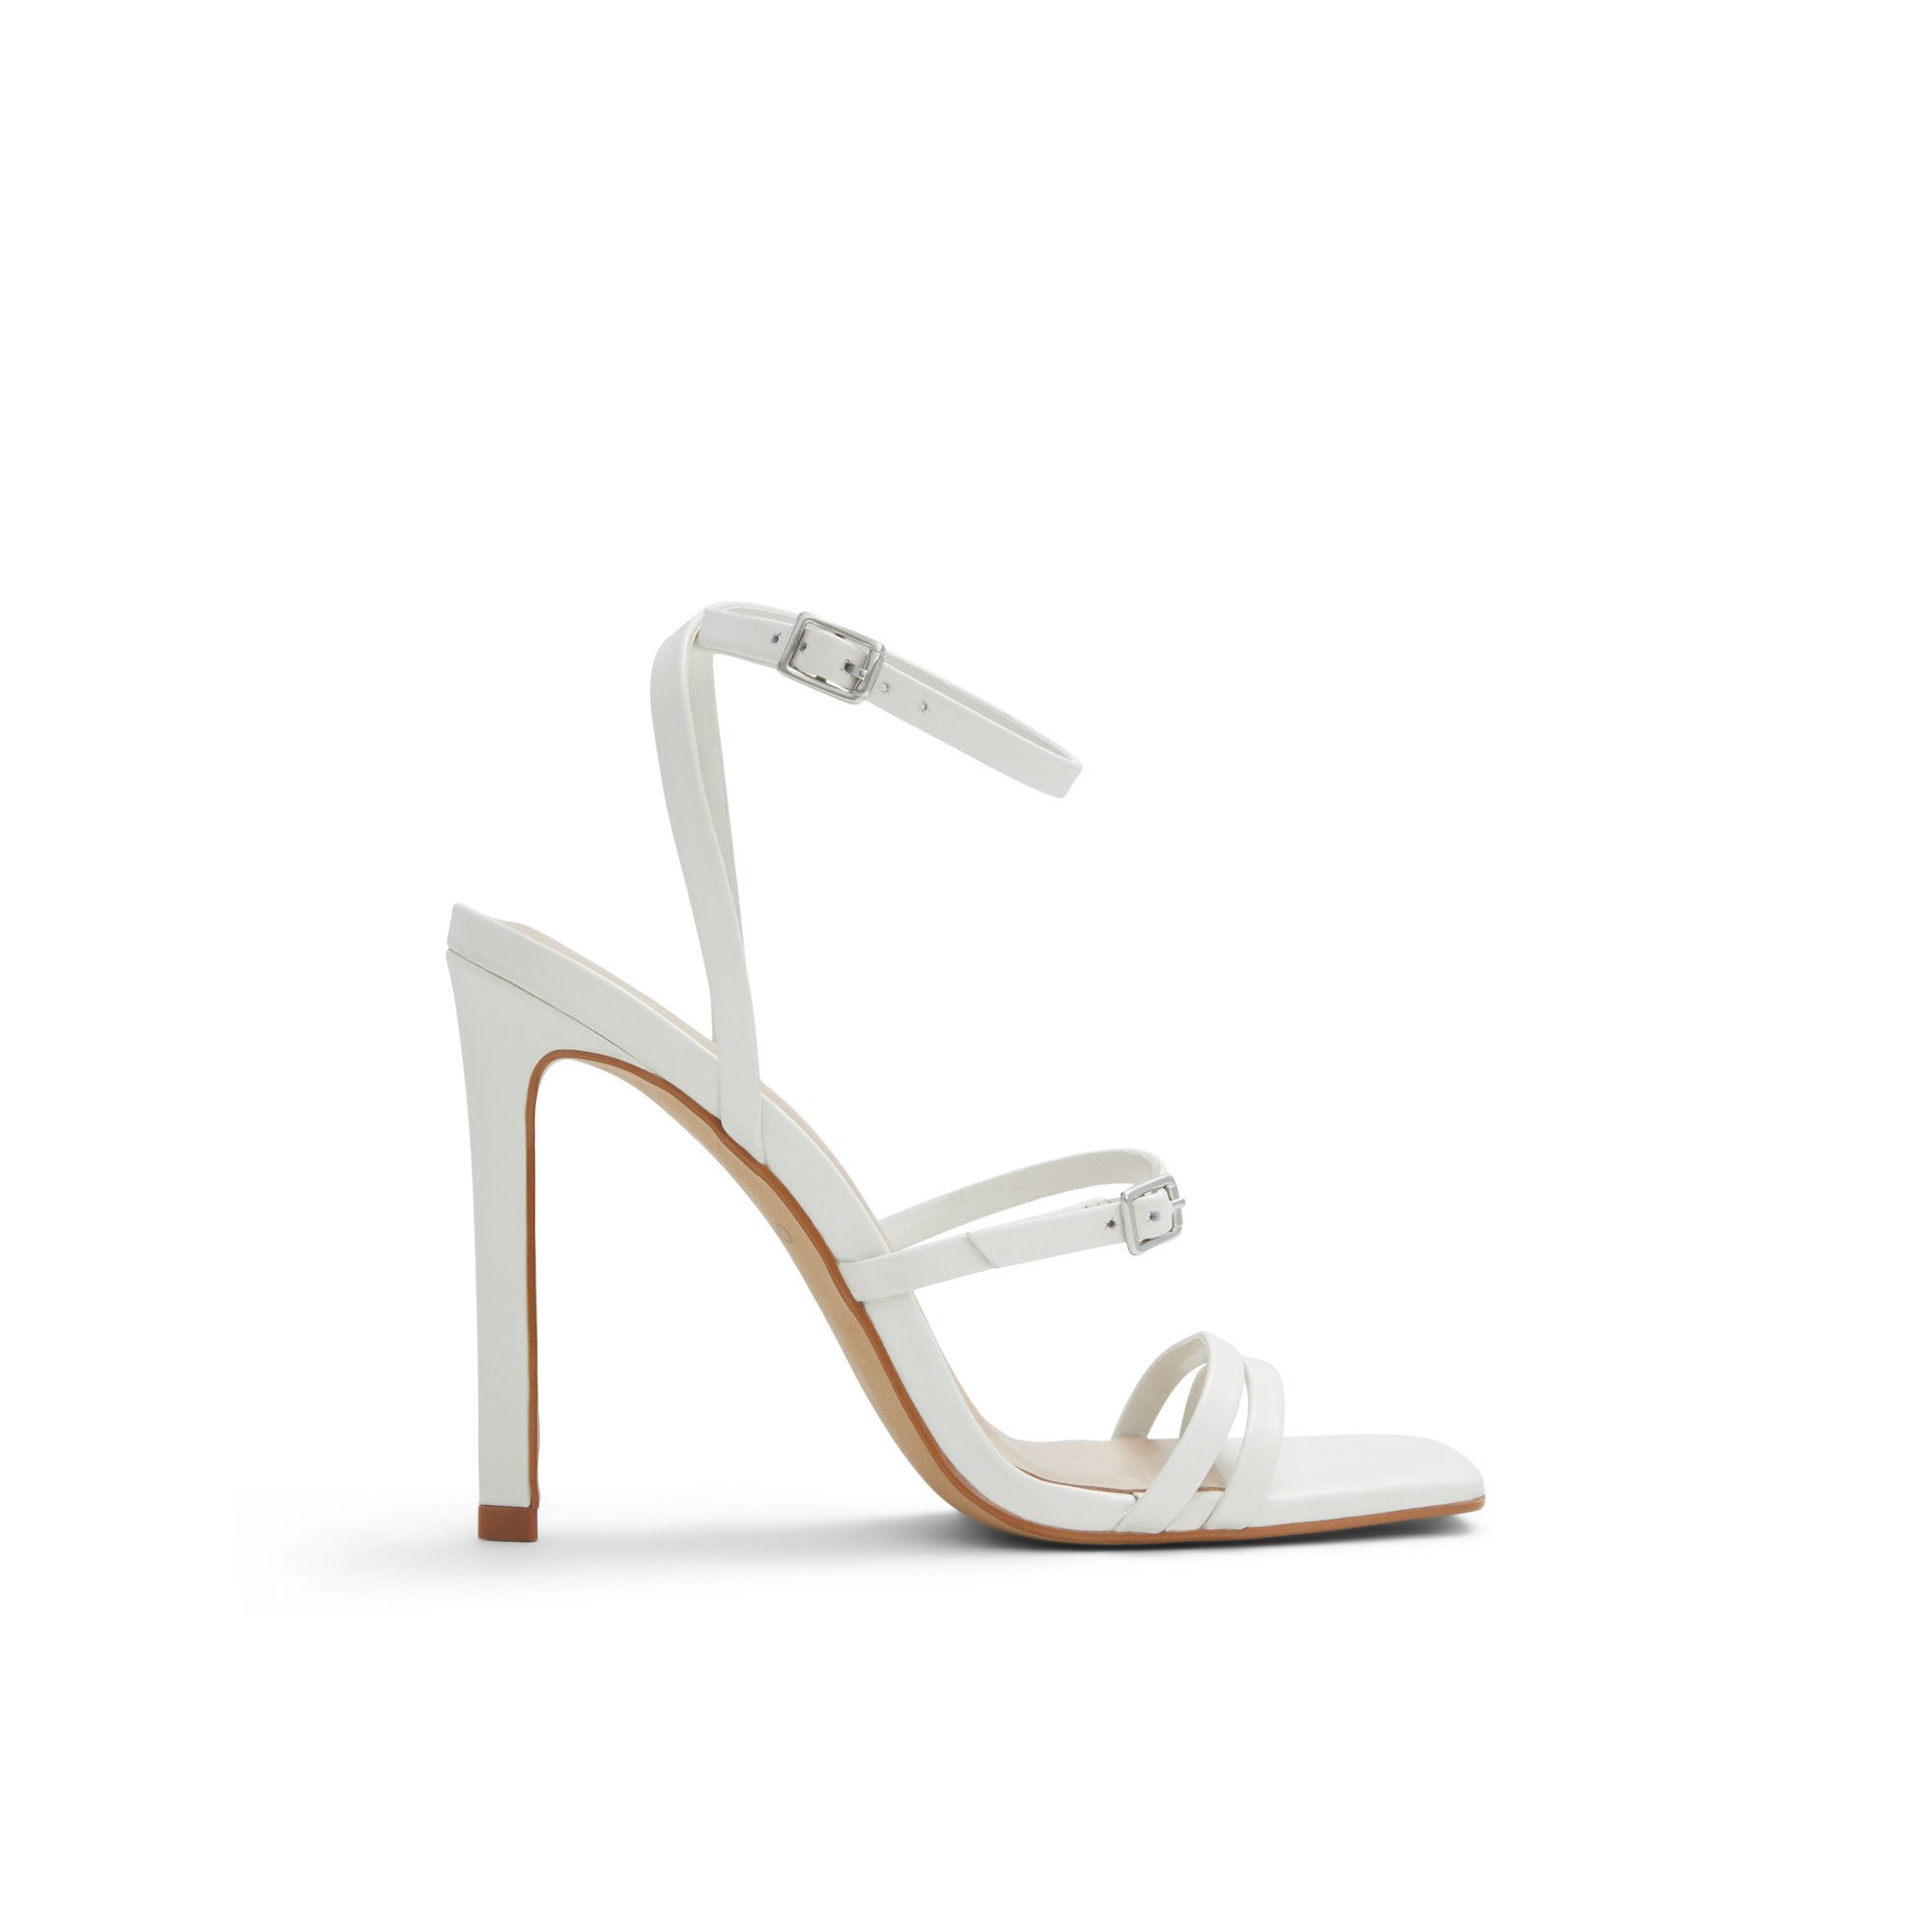 ALDO Rostyn - Women's Strappy Sandal Sandals - White